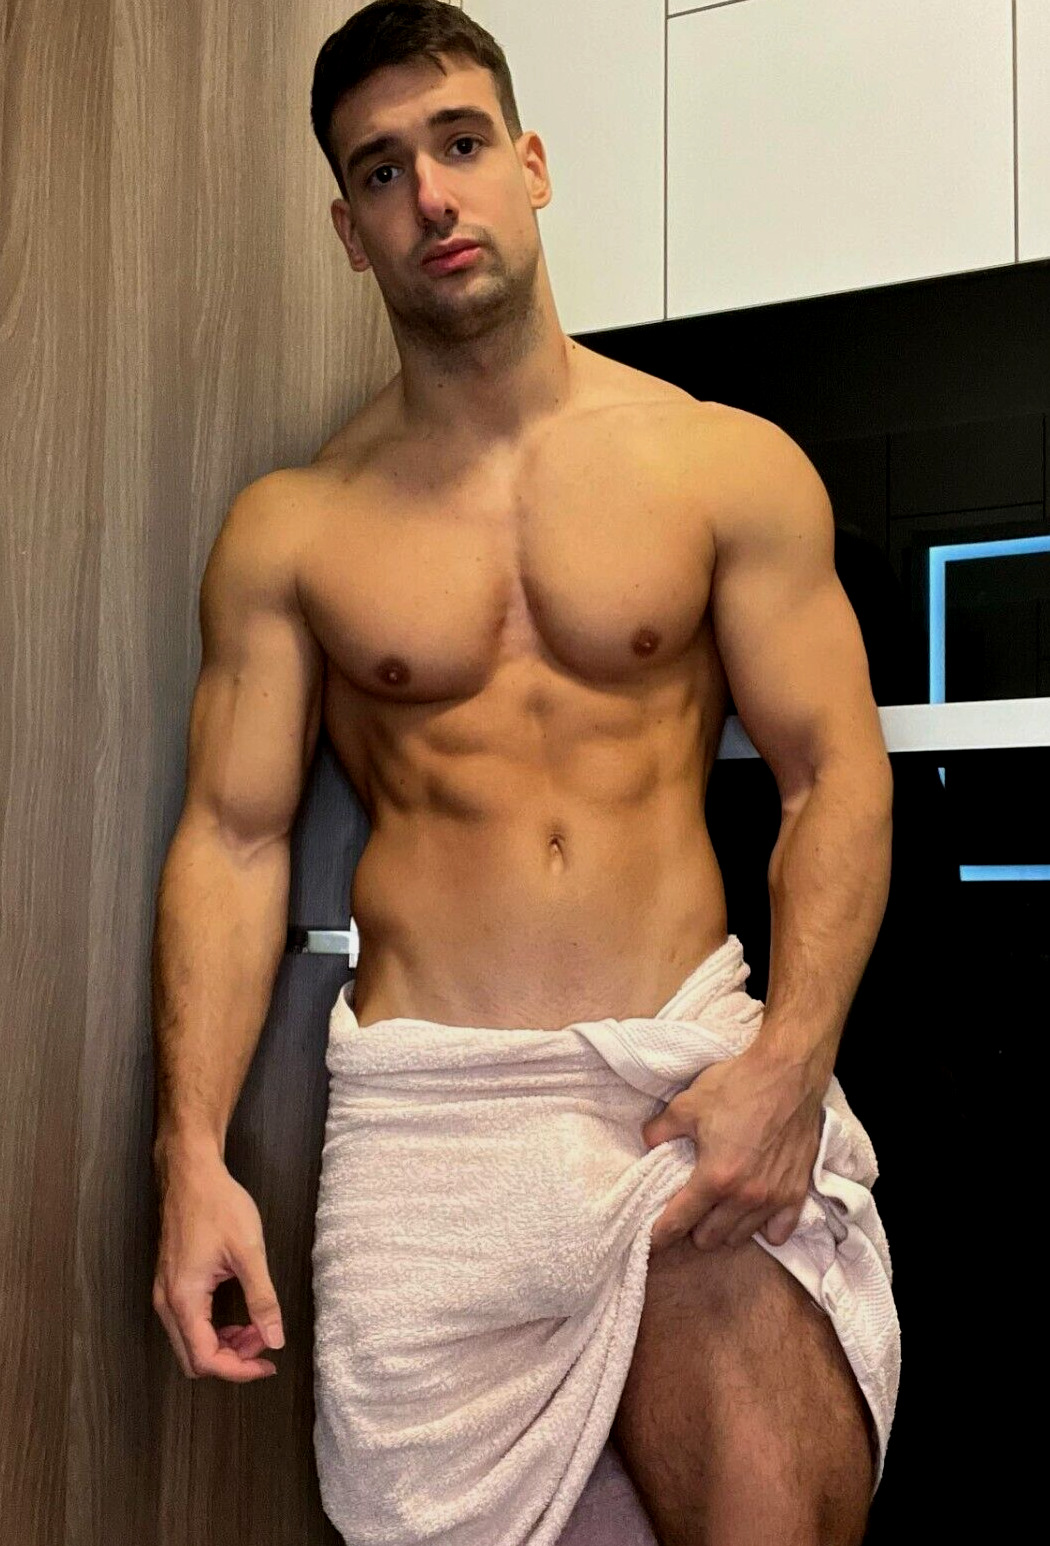 Shirtless Male Beefcake Muscular Towel Shower Jock Hunk PHOTO 4X6 H647